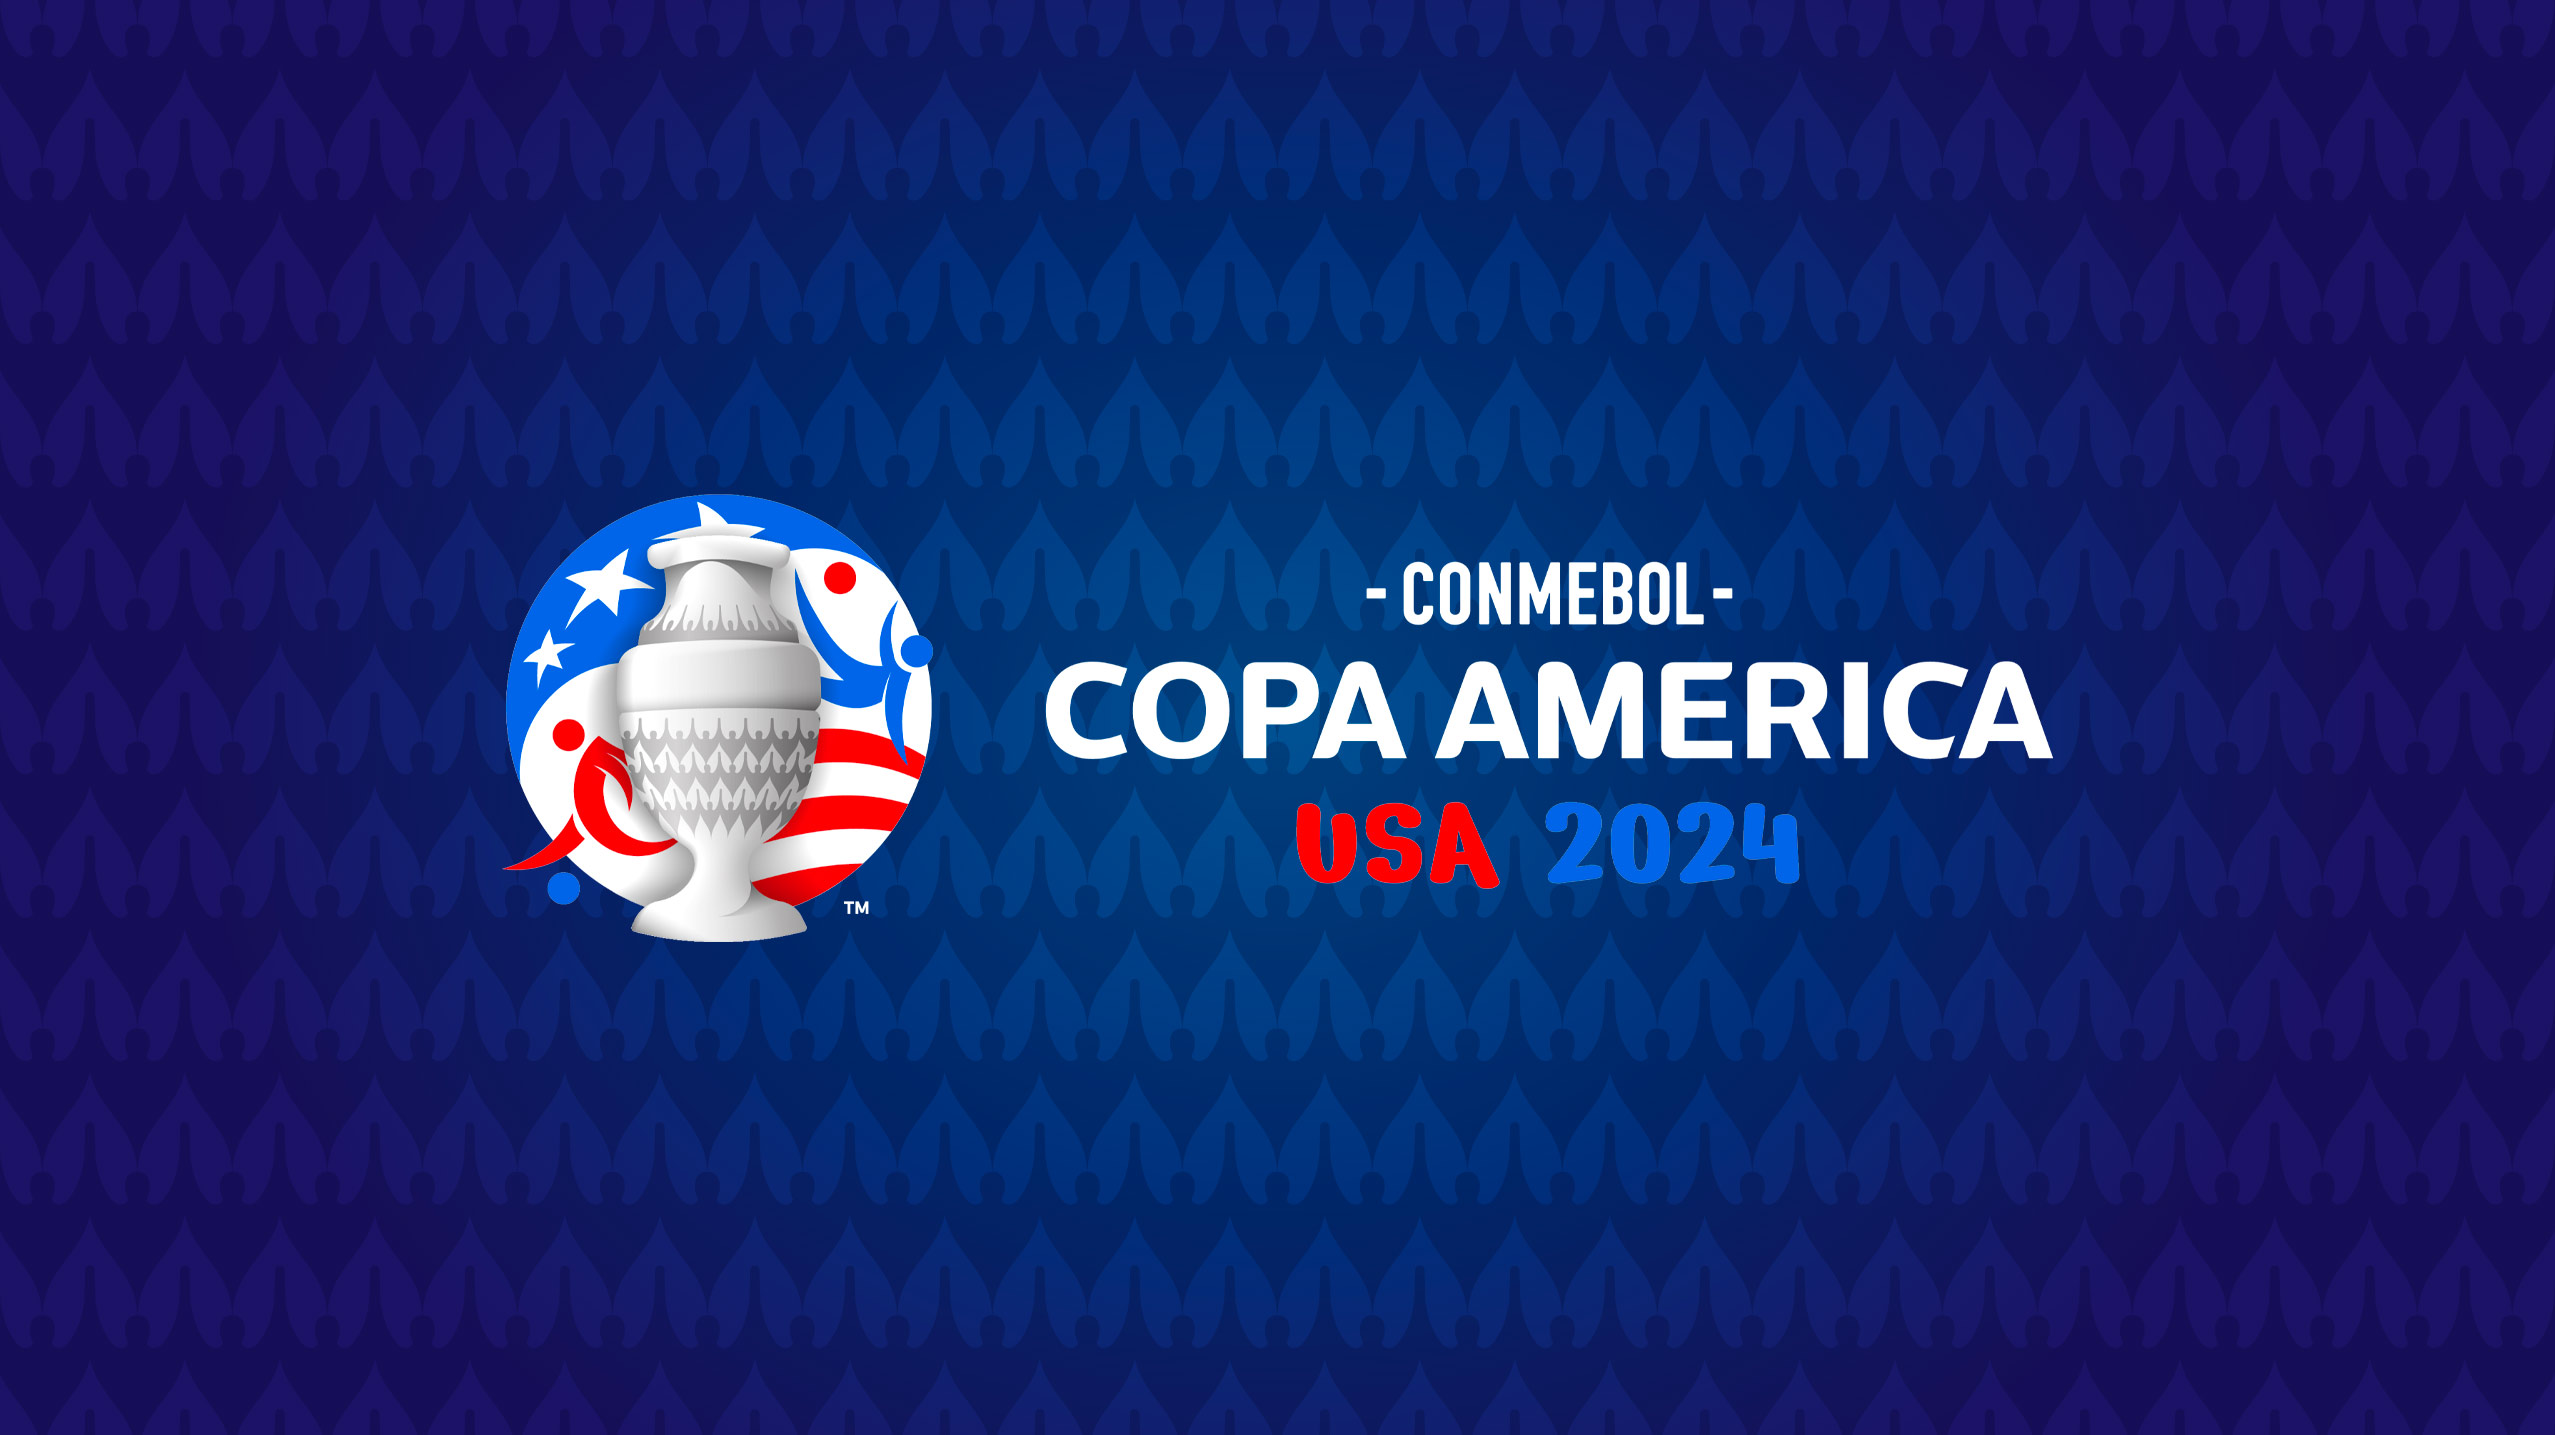 Imagen Fondo Conmebol Copa América USA 2024